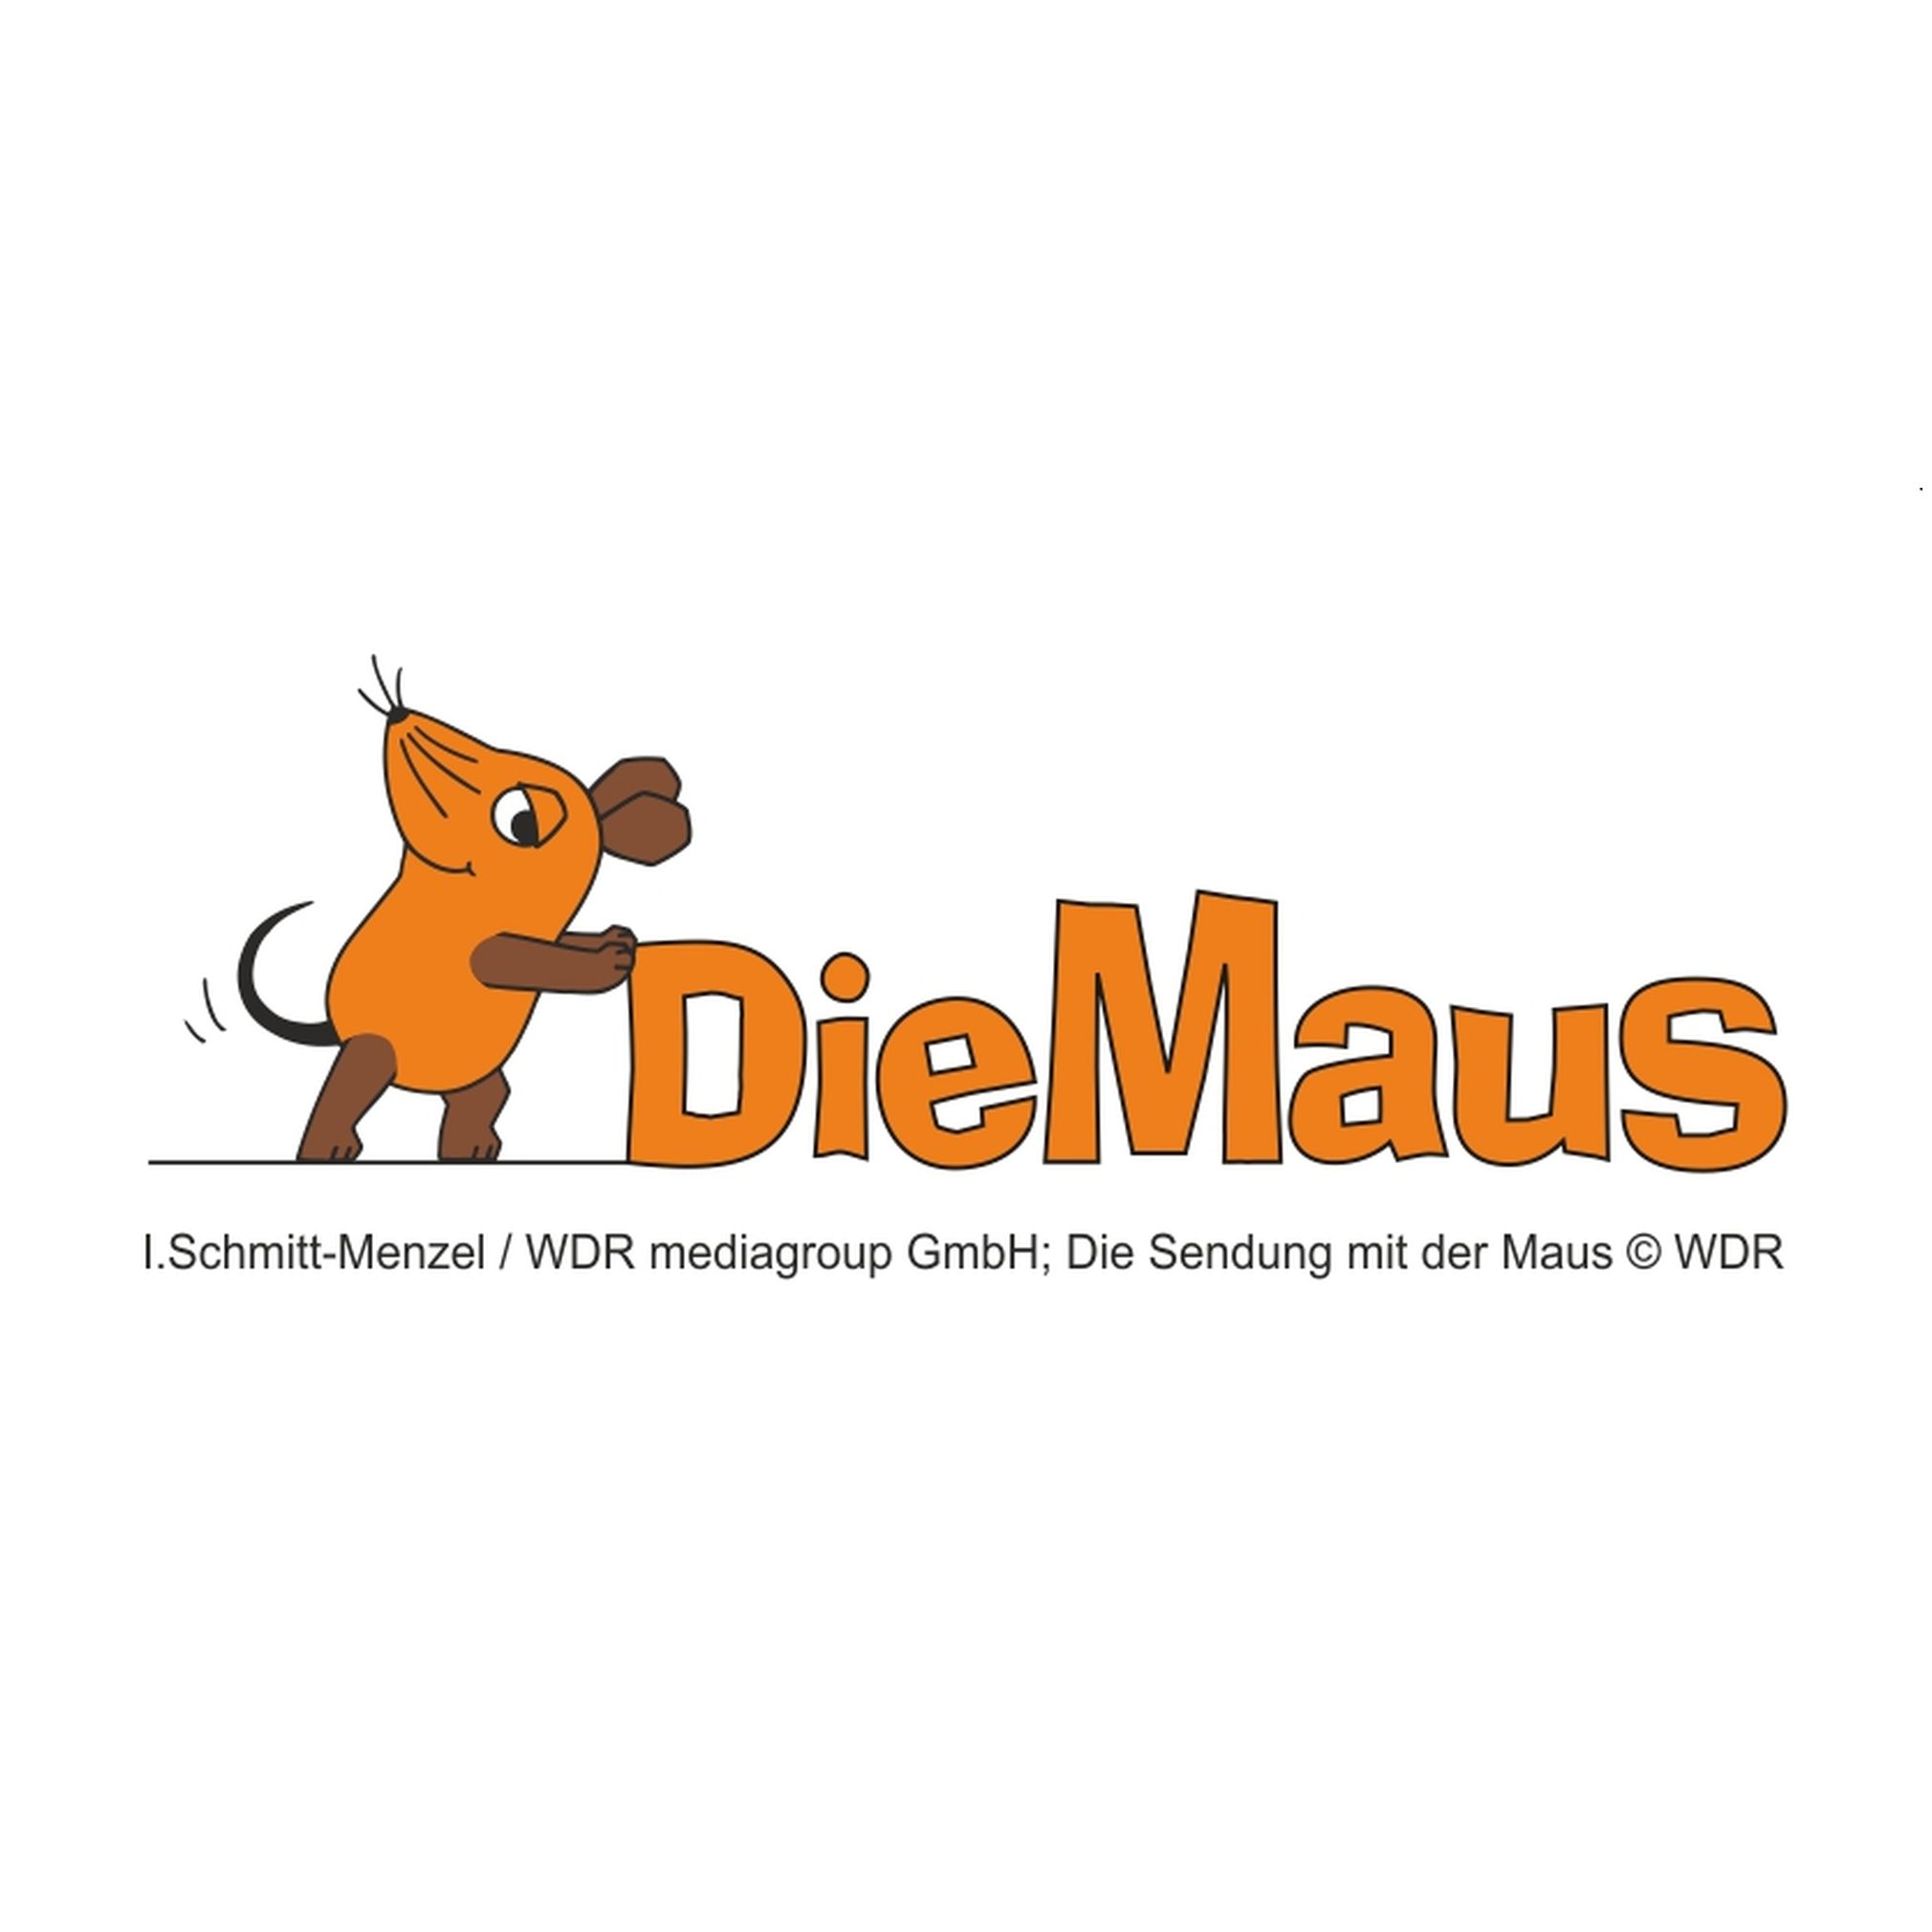 Die Maus by IVKO